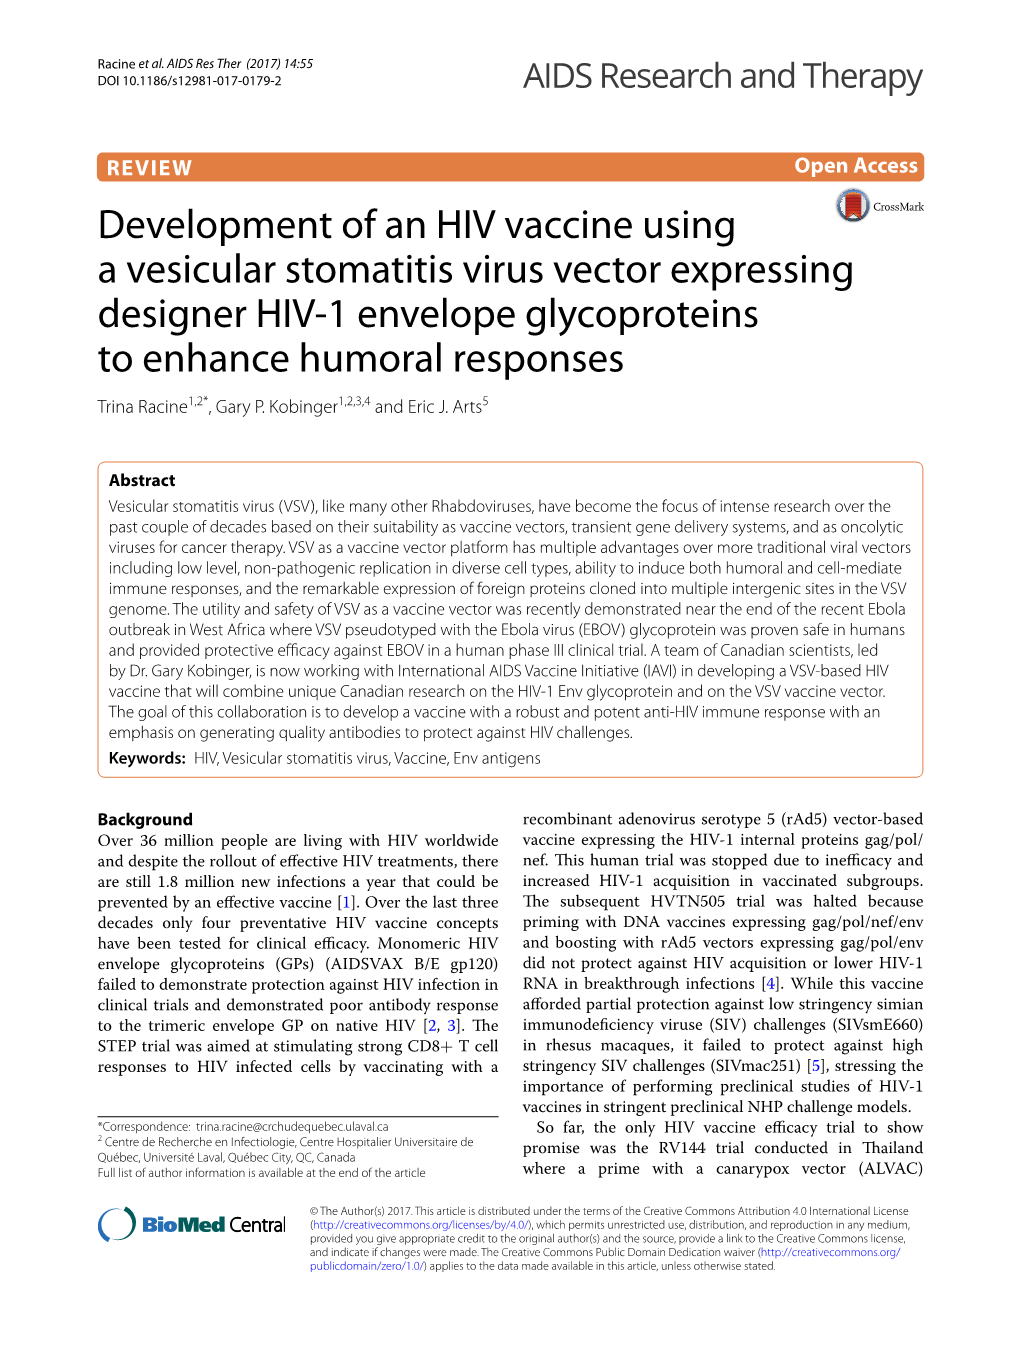 Development of an HIV Vaccine Using a Vesicular Stomatitis Virus Vector